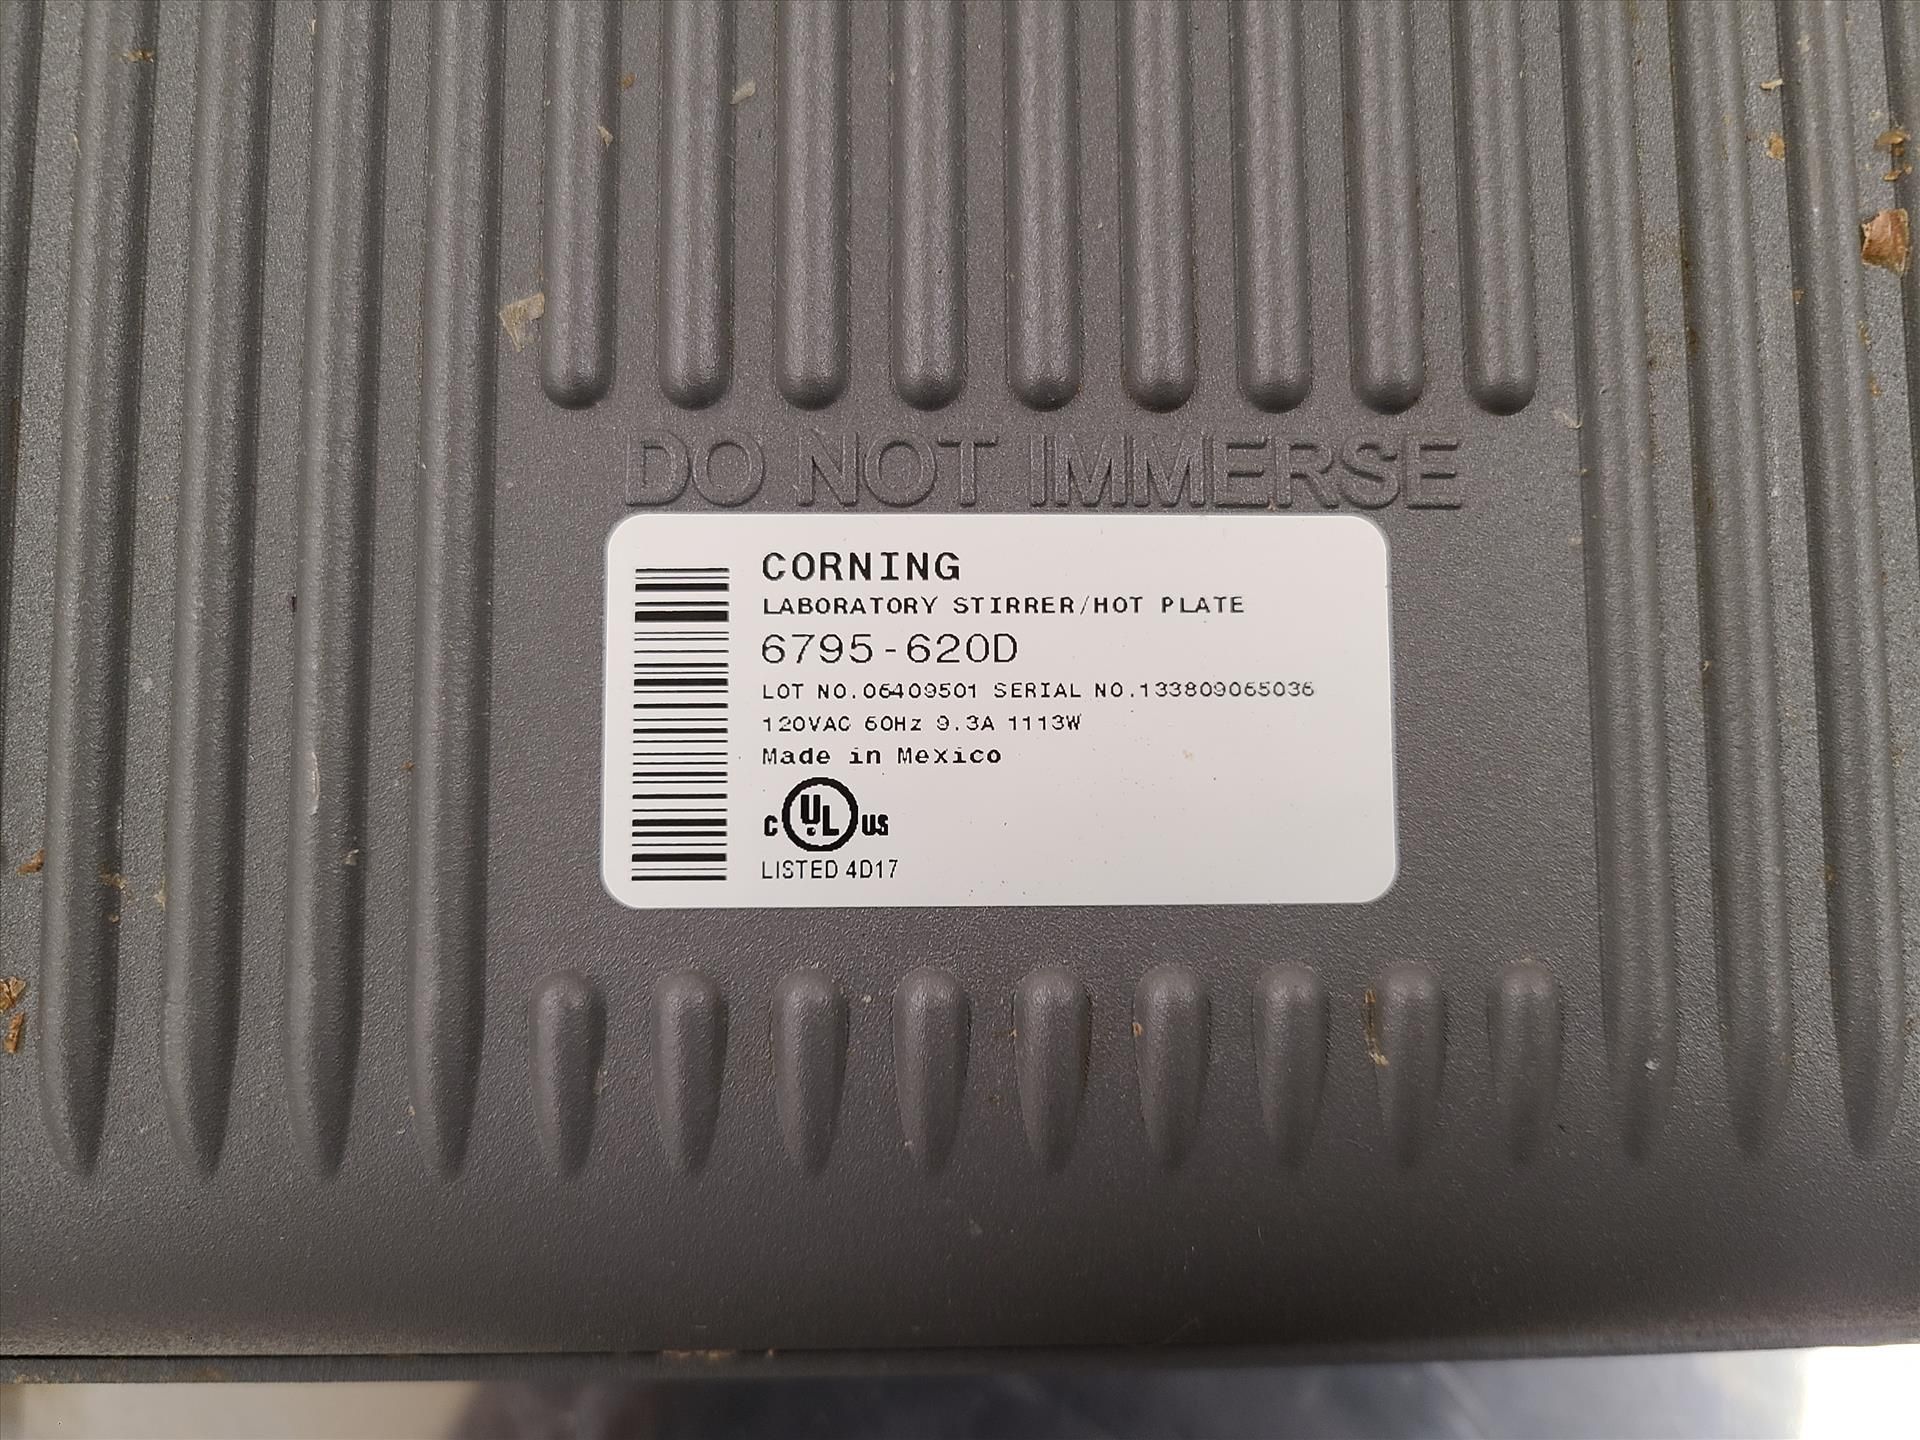 Corning Hot Plate/Stirrer mod. PC-620D, ser. no. 133809065036 - Image 2 of 3